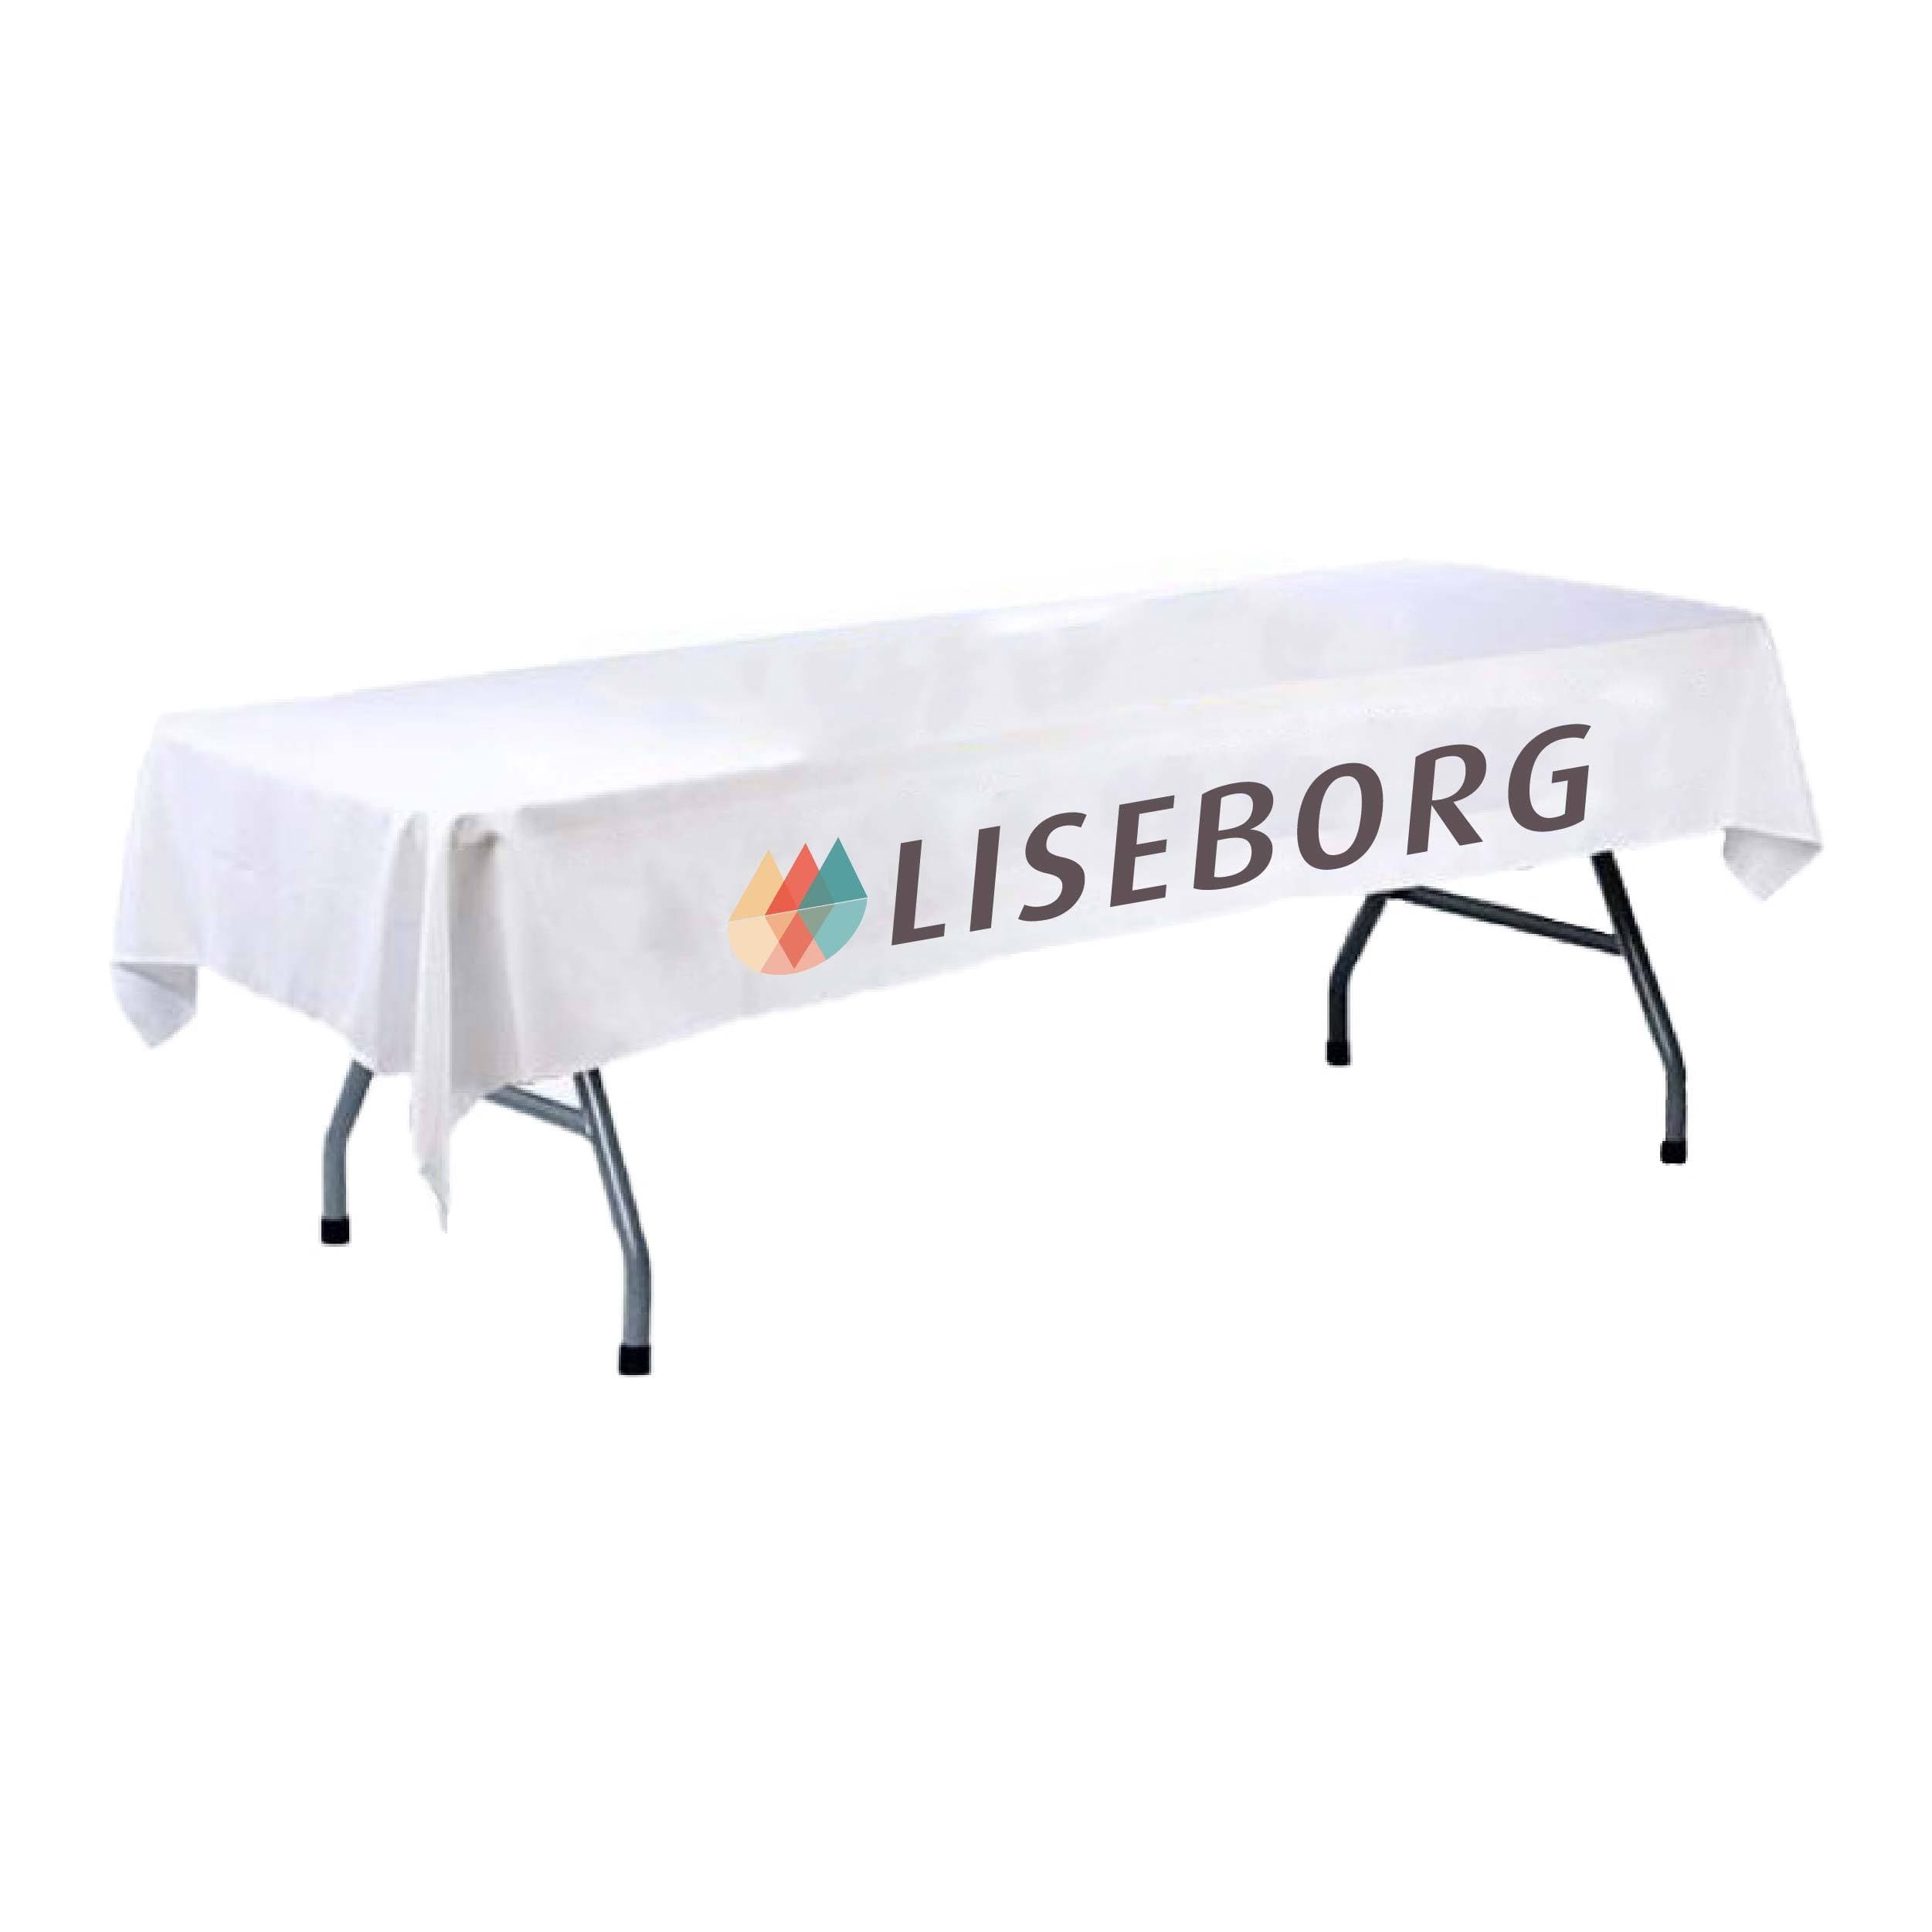 Se Borddug med eget print og logo hos Liseborg